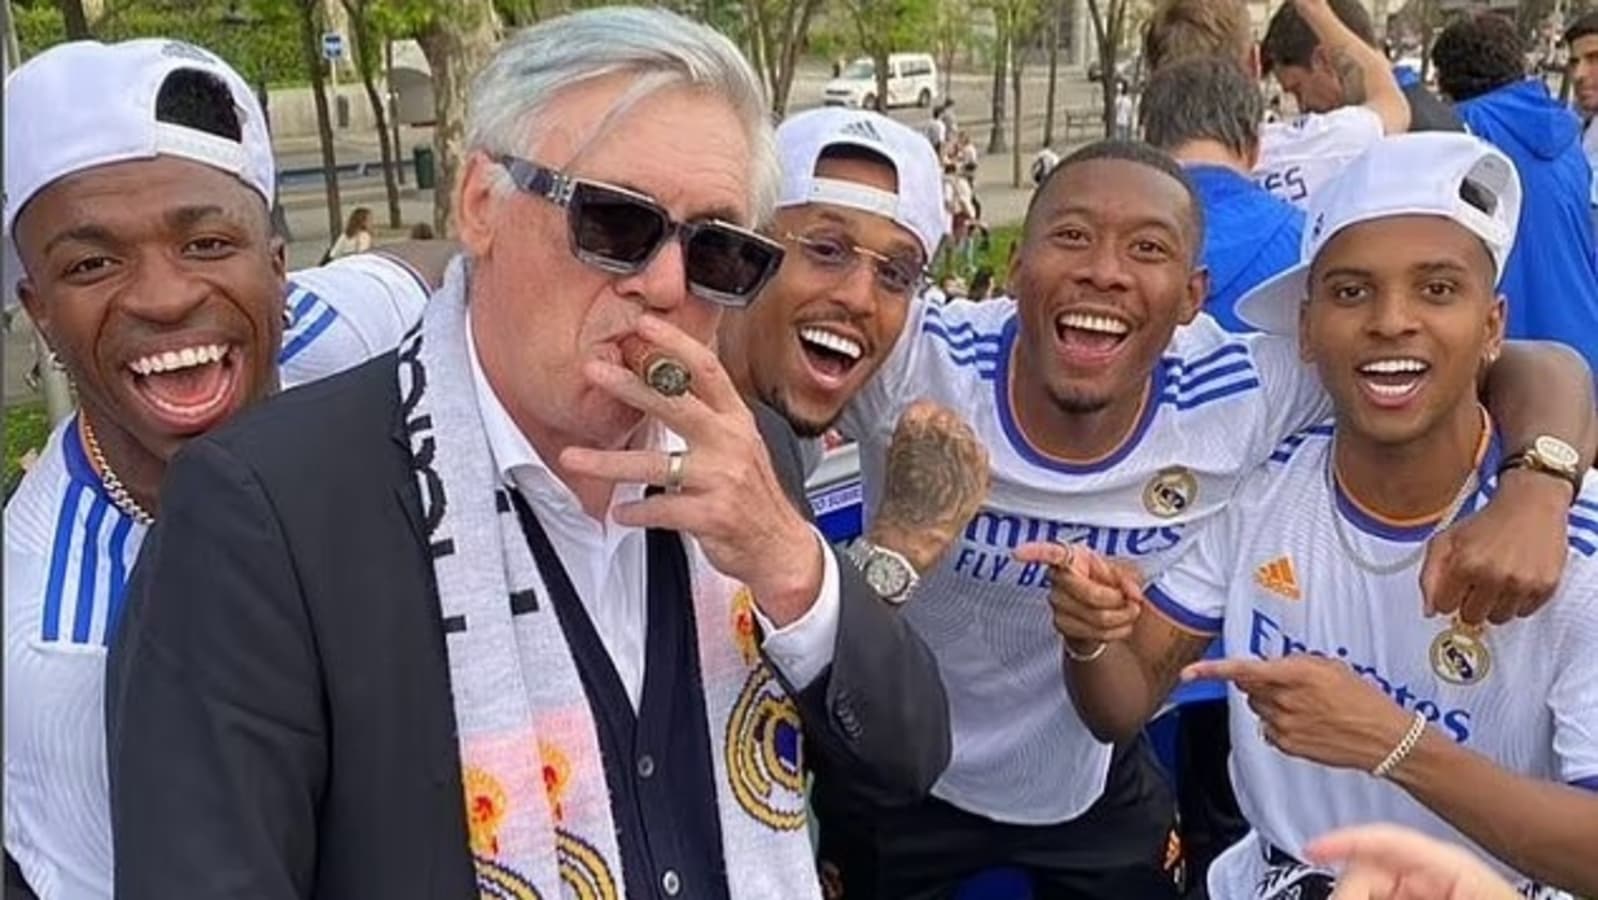 Carlo Ancelotti rocks shades, puffs cigar during Real Madrid’s LaLiga title celebrations, photo goes viral